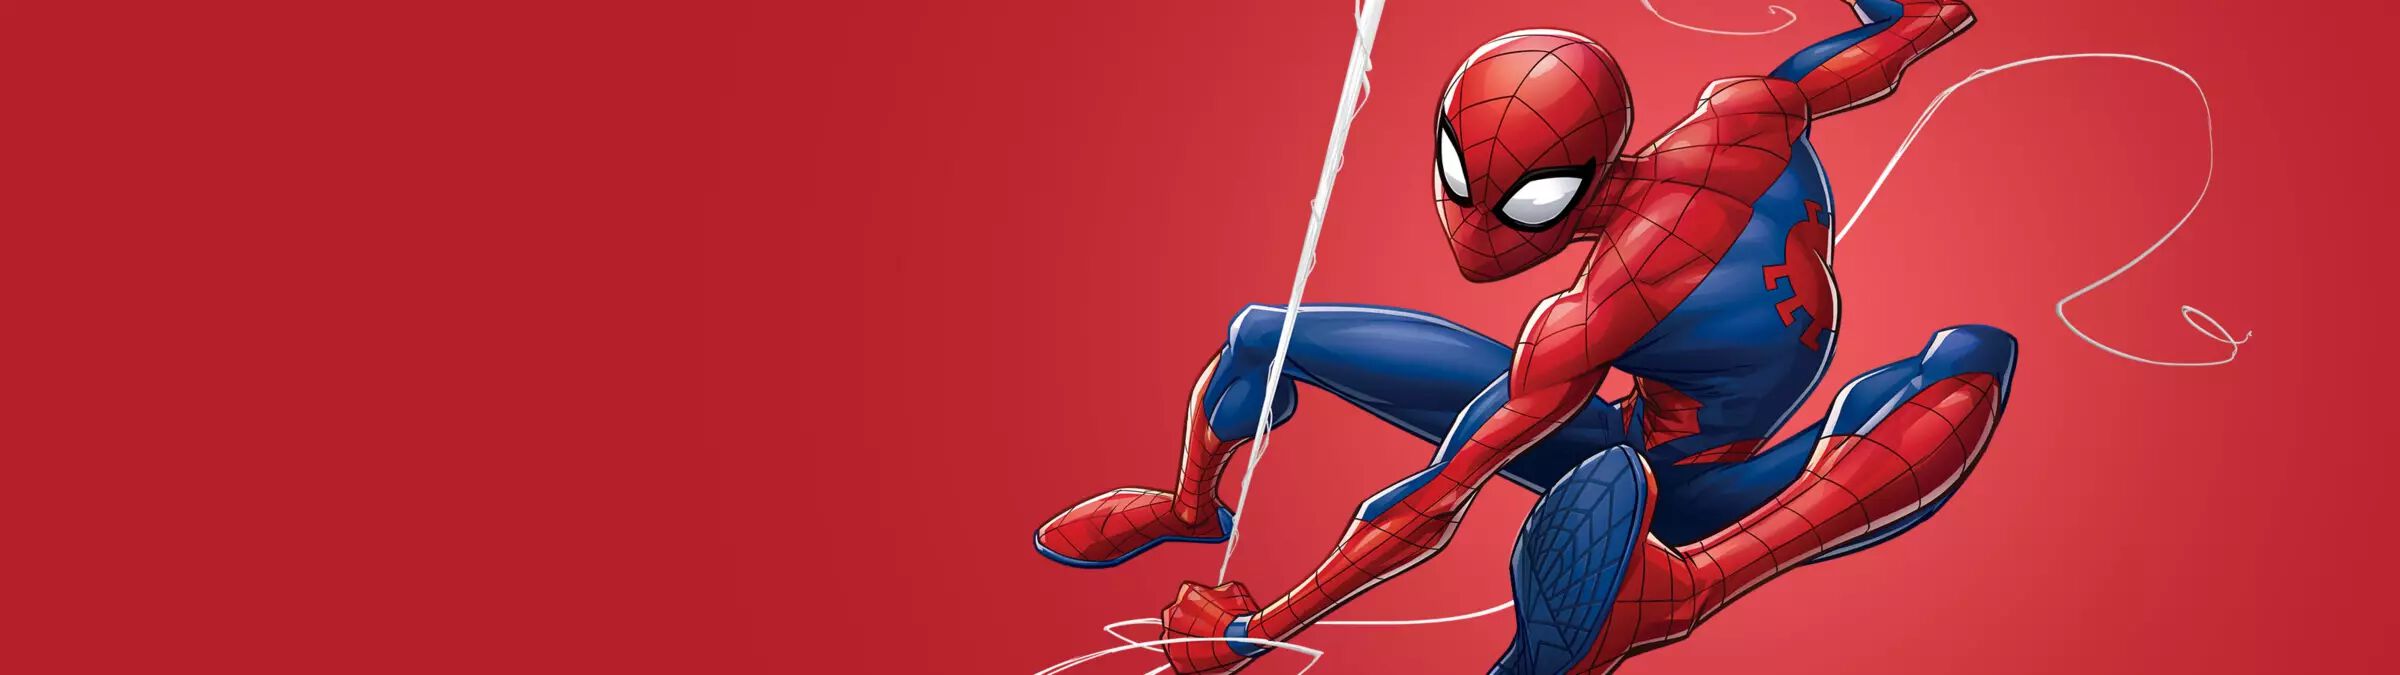 Spiderman Web Slinging showcased on red background